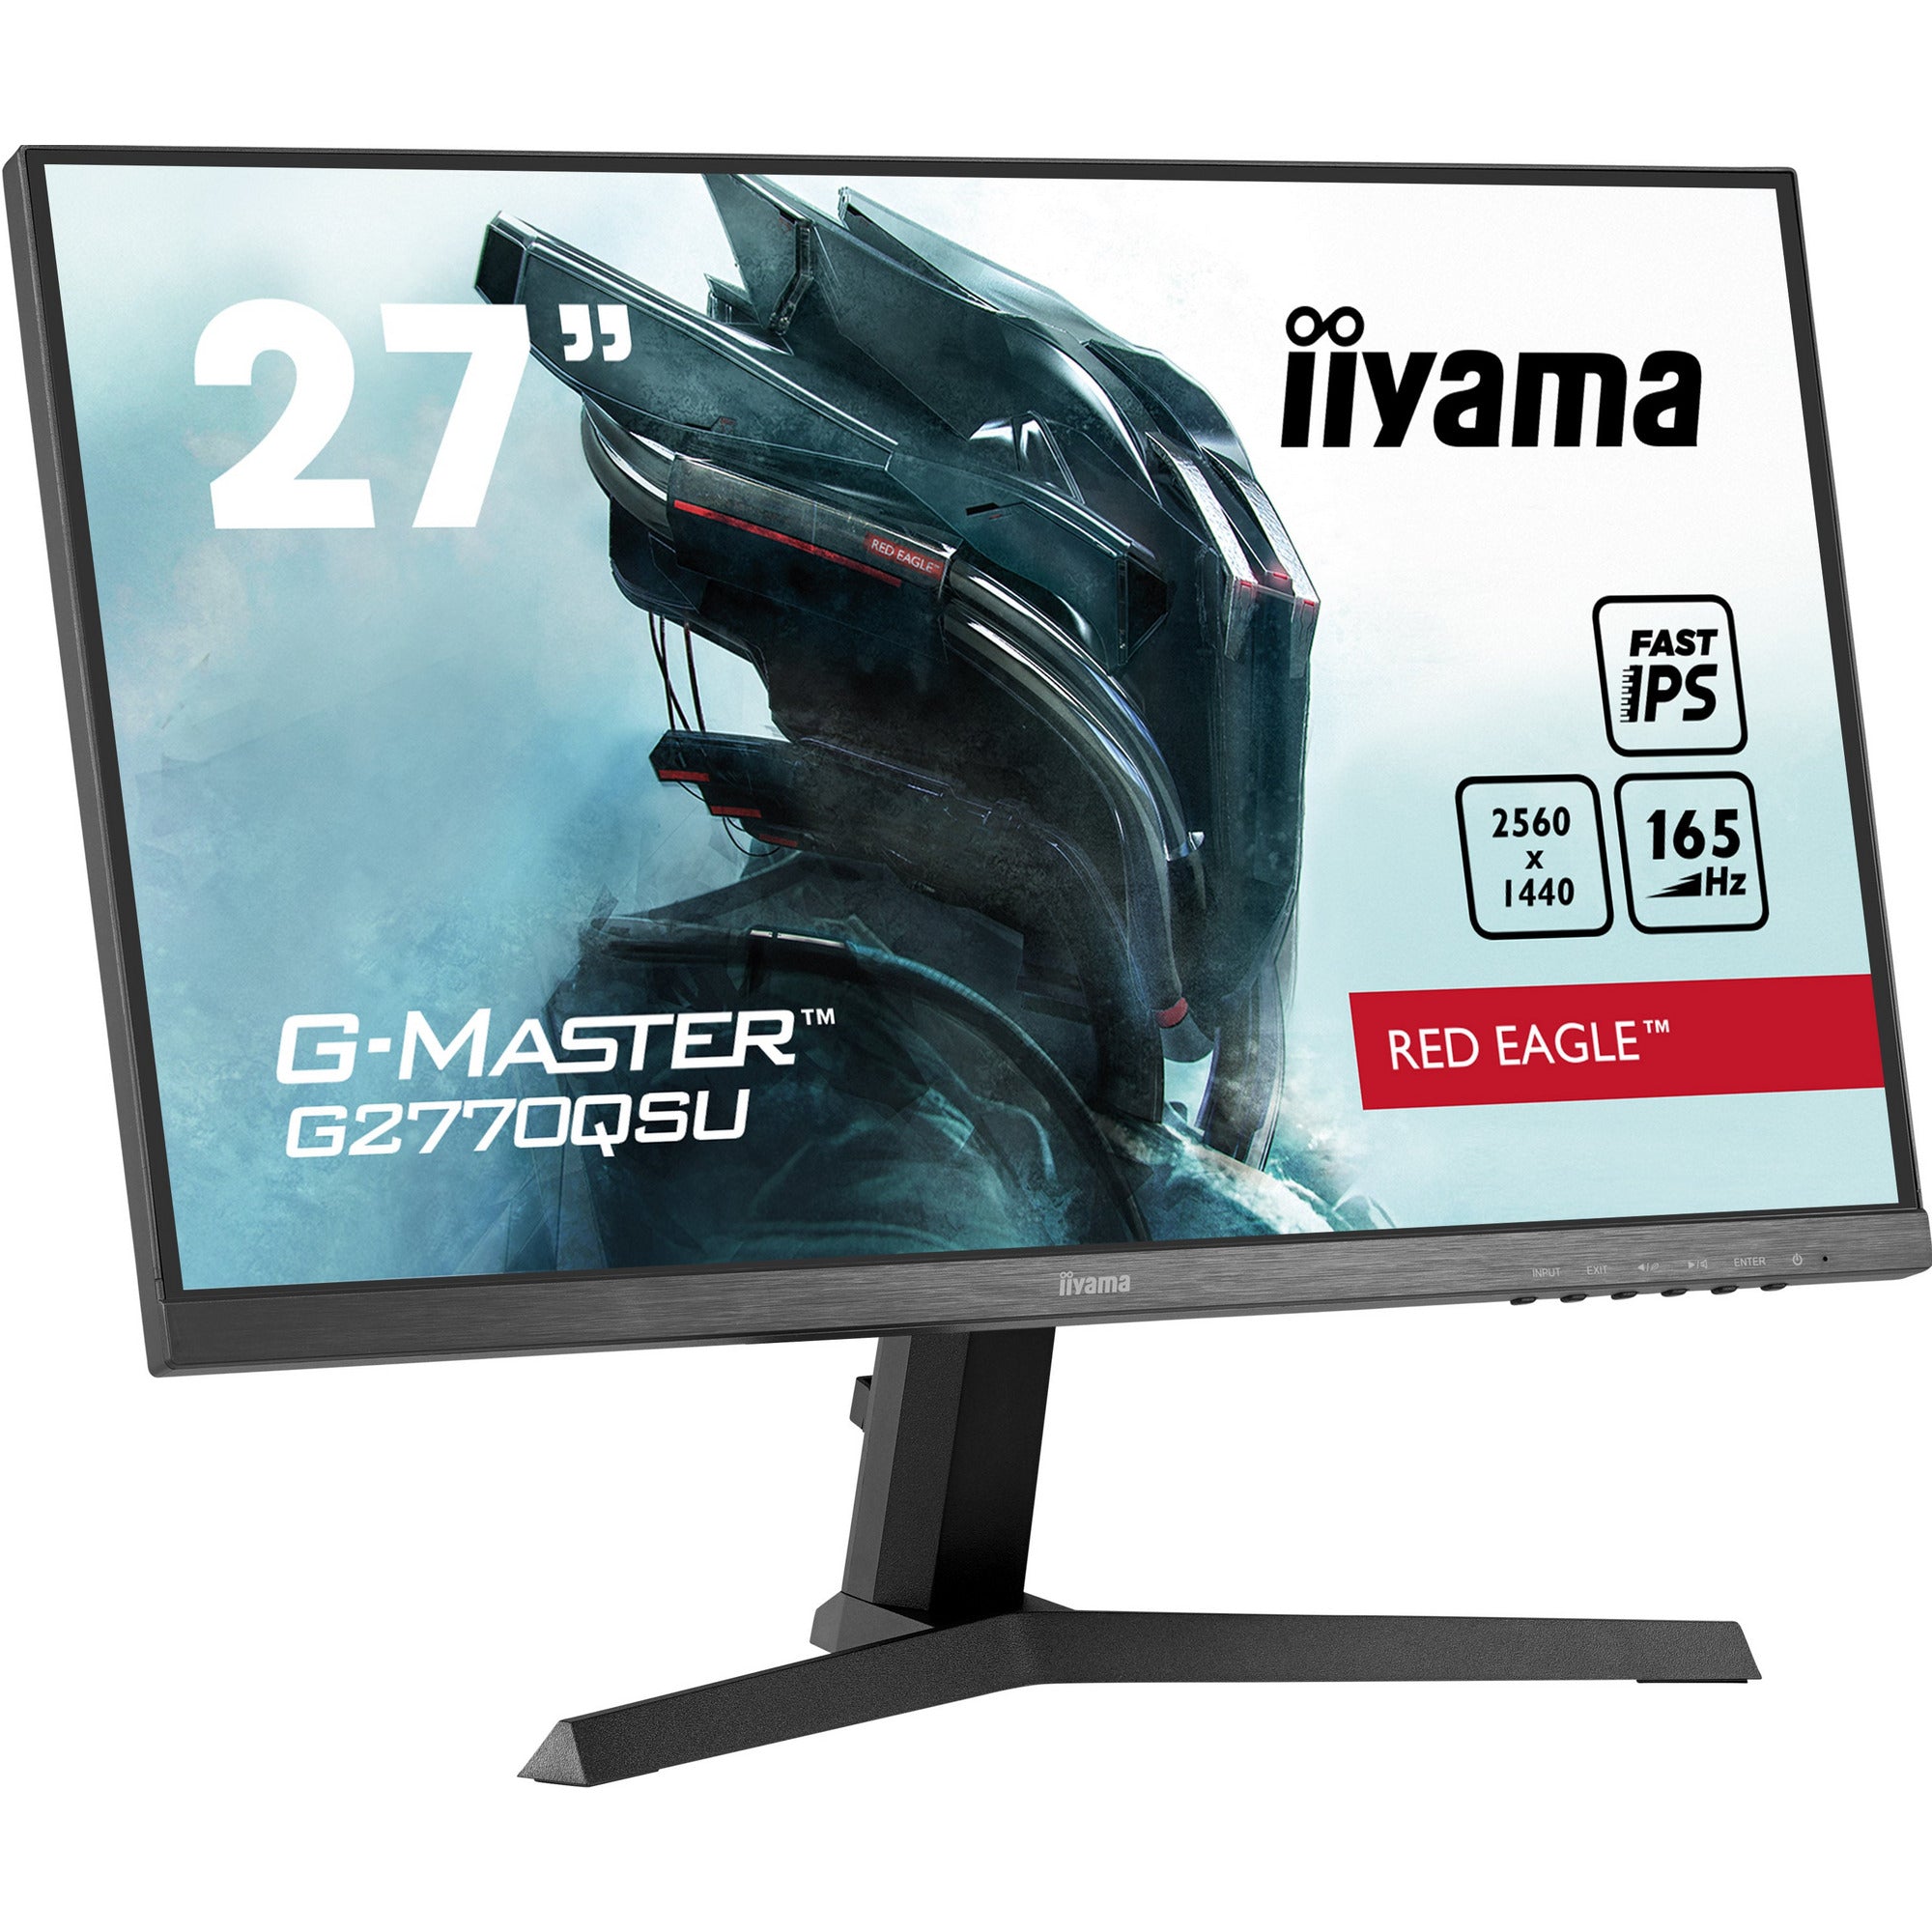 Iiyama G-Master G2770QSU-B1 Fast IPS Red Eagle Gaming Monitor with Fixed Stand